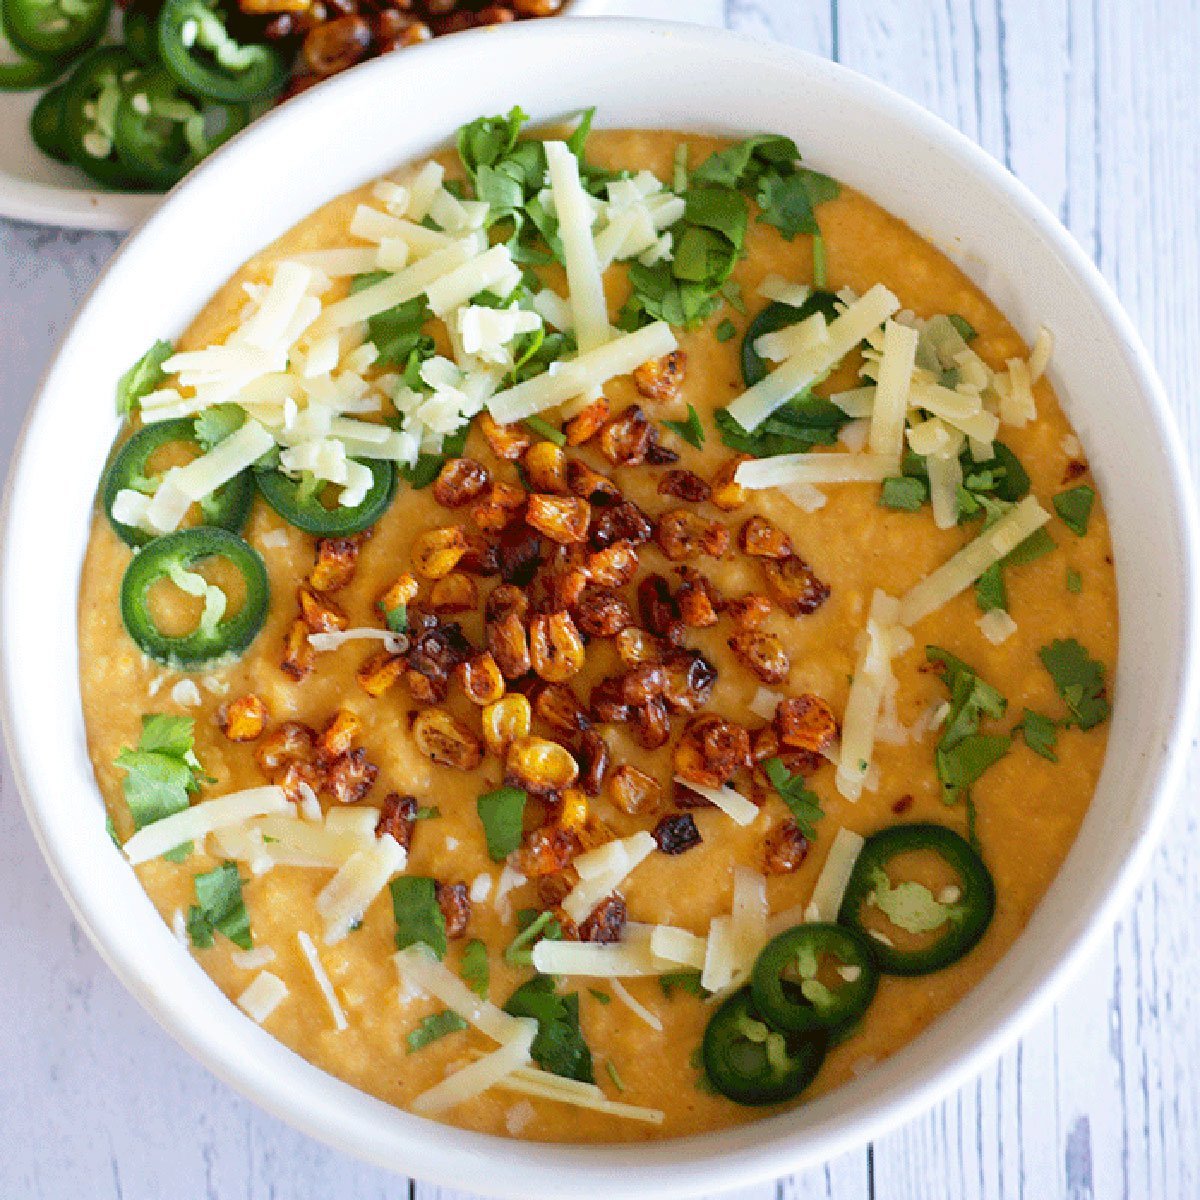 Sopa De Elote Recipe (Mexican Street Corn Soup) - Knife and Soul